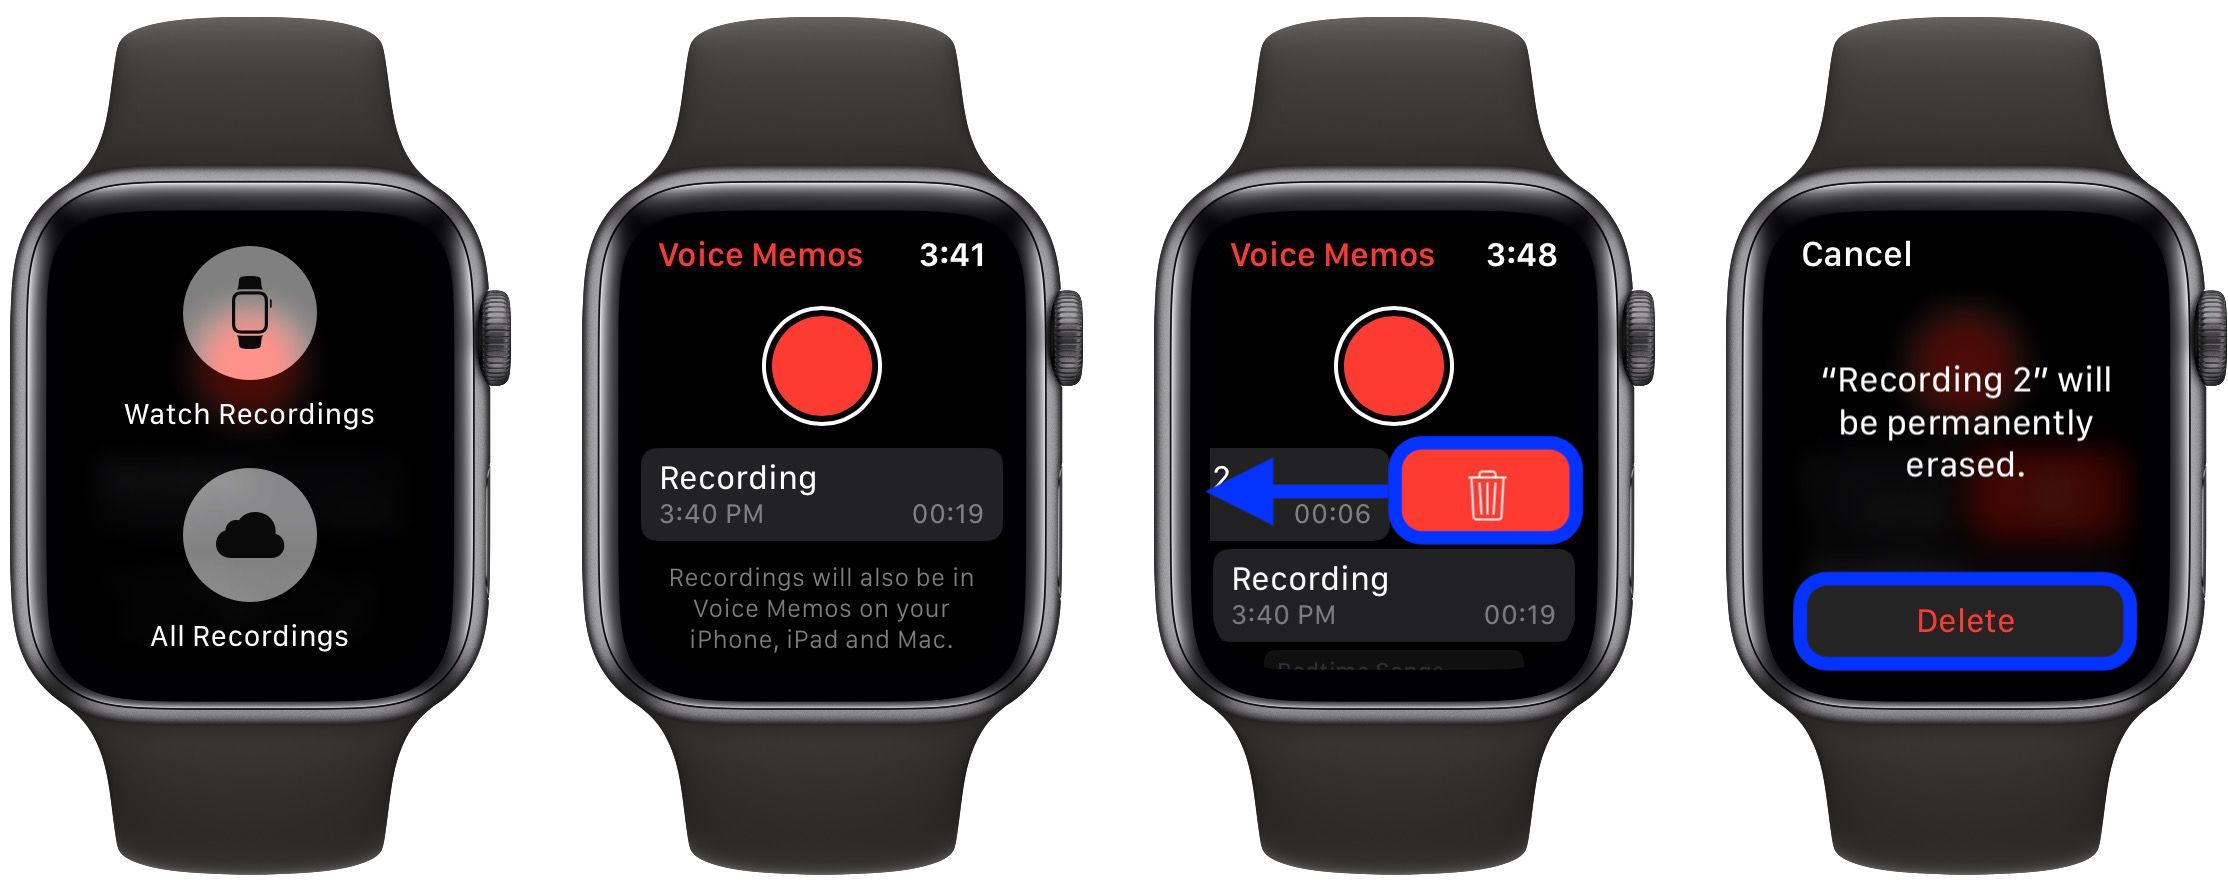 Диктофон на apple watch. Voice memos. Приложение диктофон эпл вотч. Apple watch диктофон индикатор.